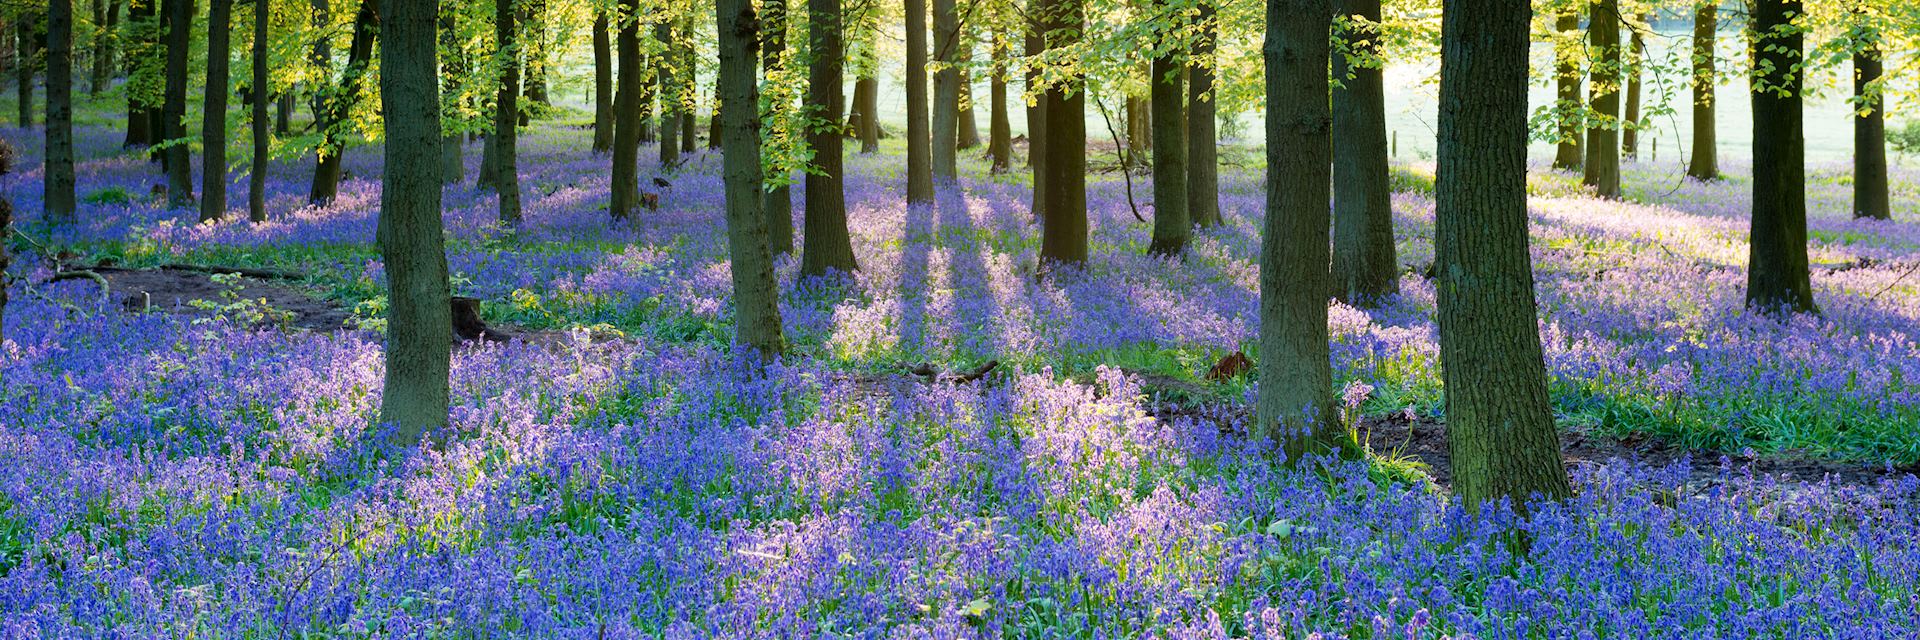 Bluebell wood, England